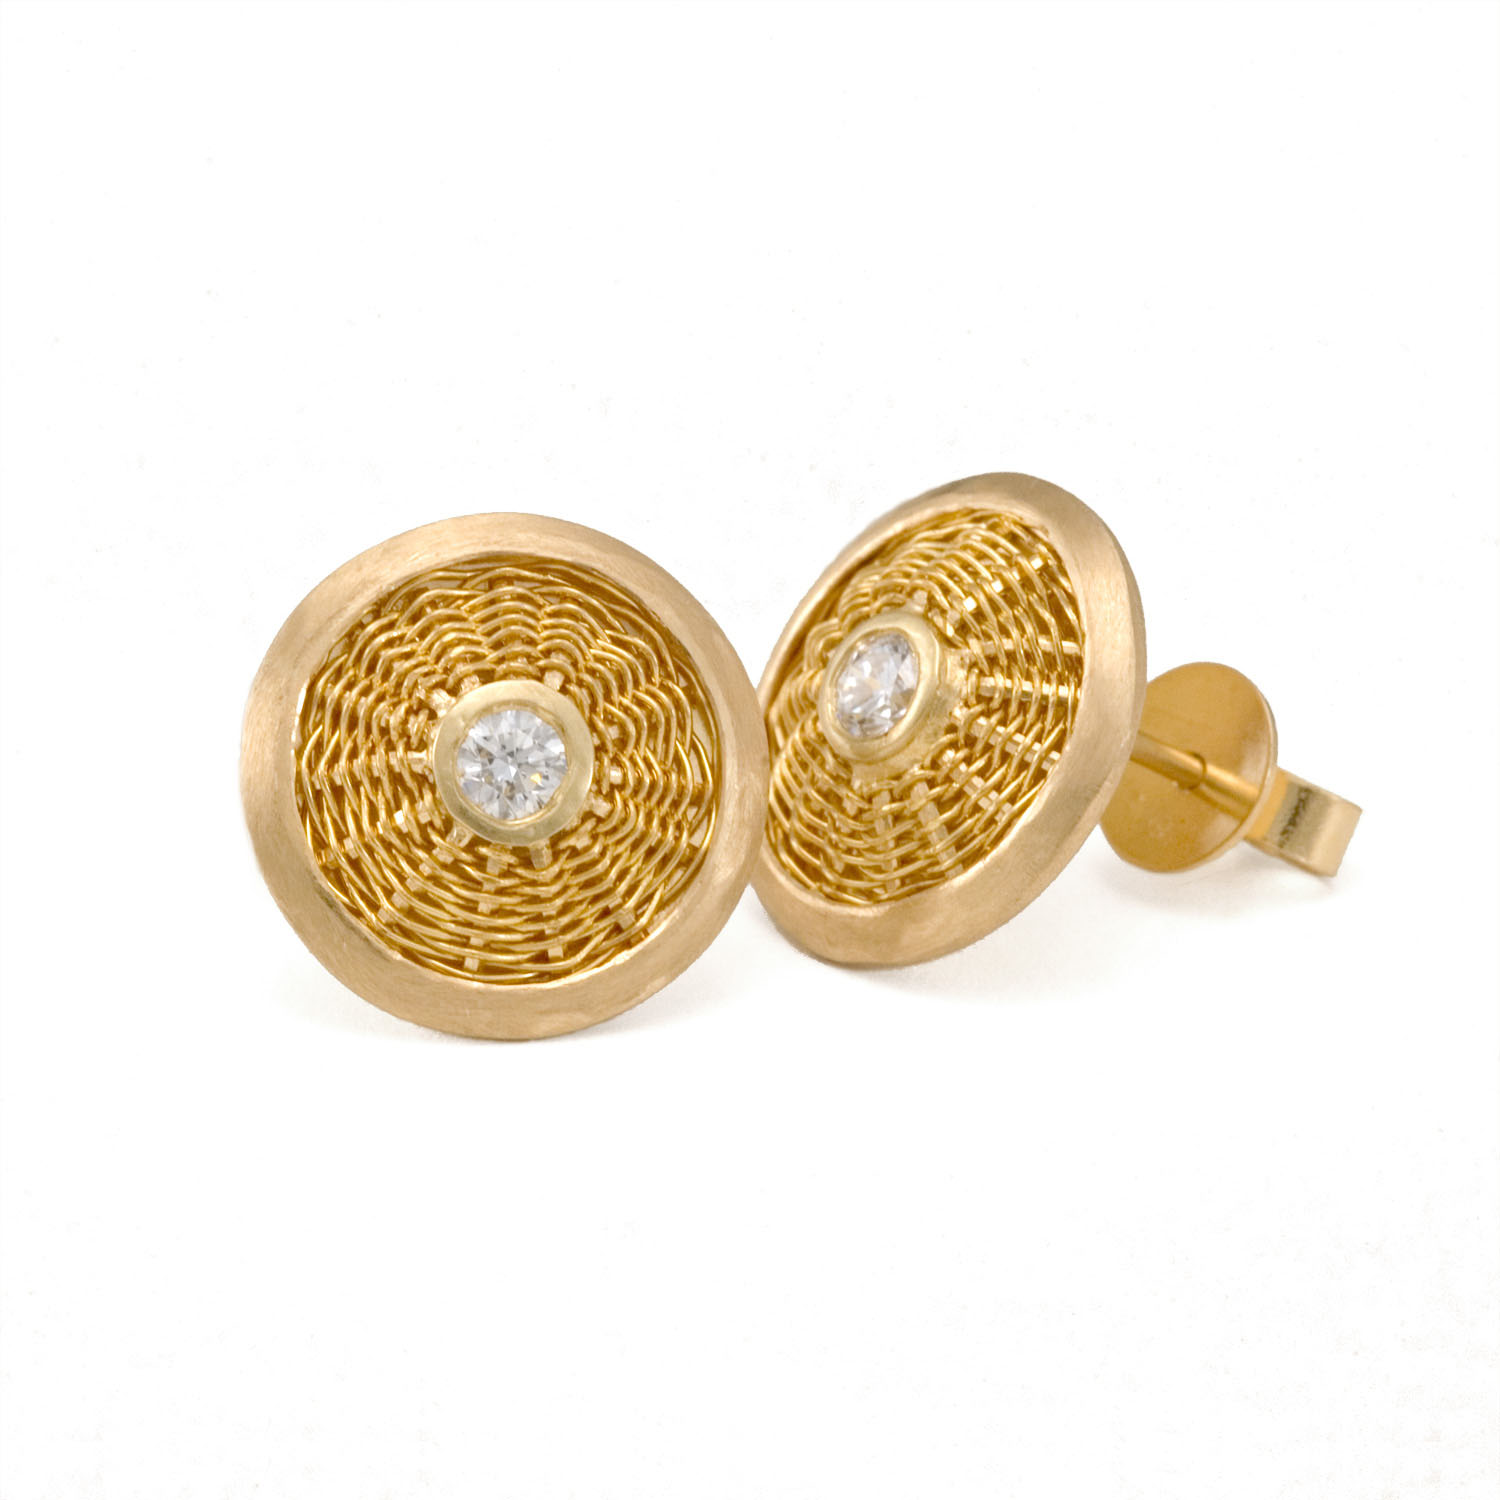 Sunburst Weave Stud Earrings in 18k & 22k gold with blue sapphires by Tamberlaine